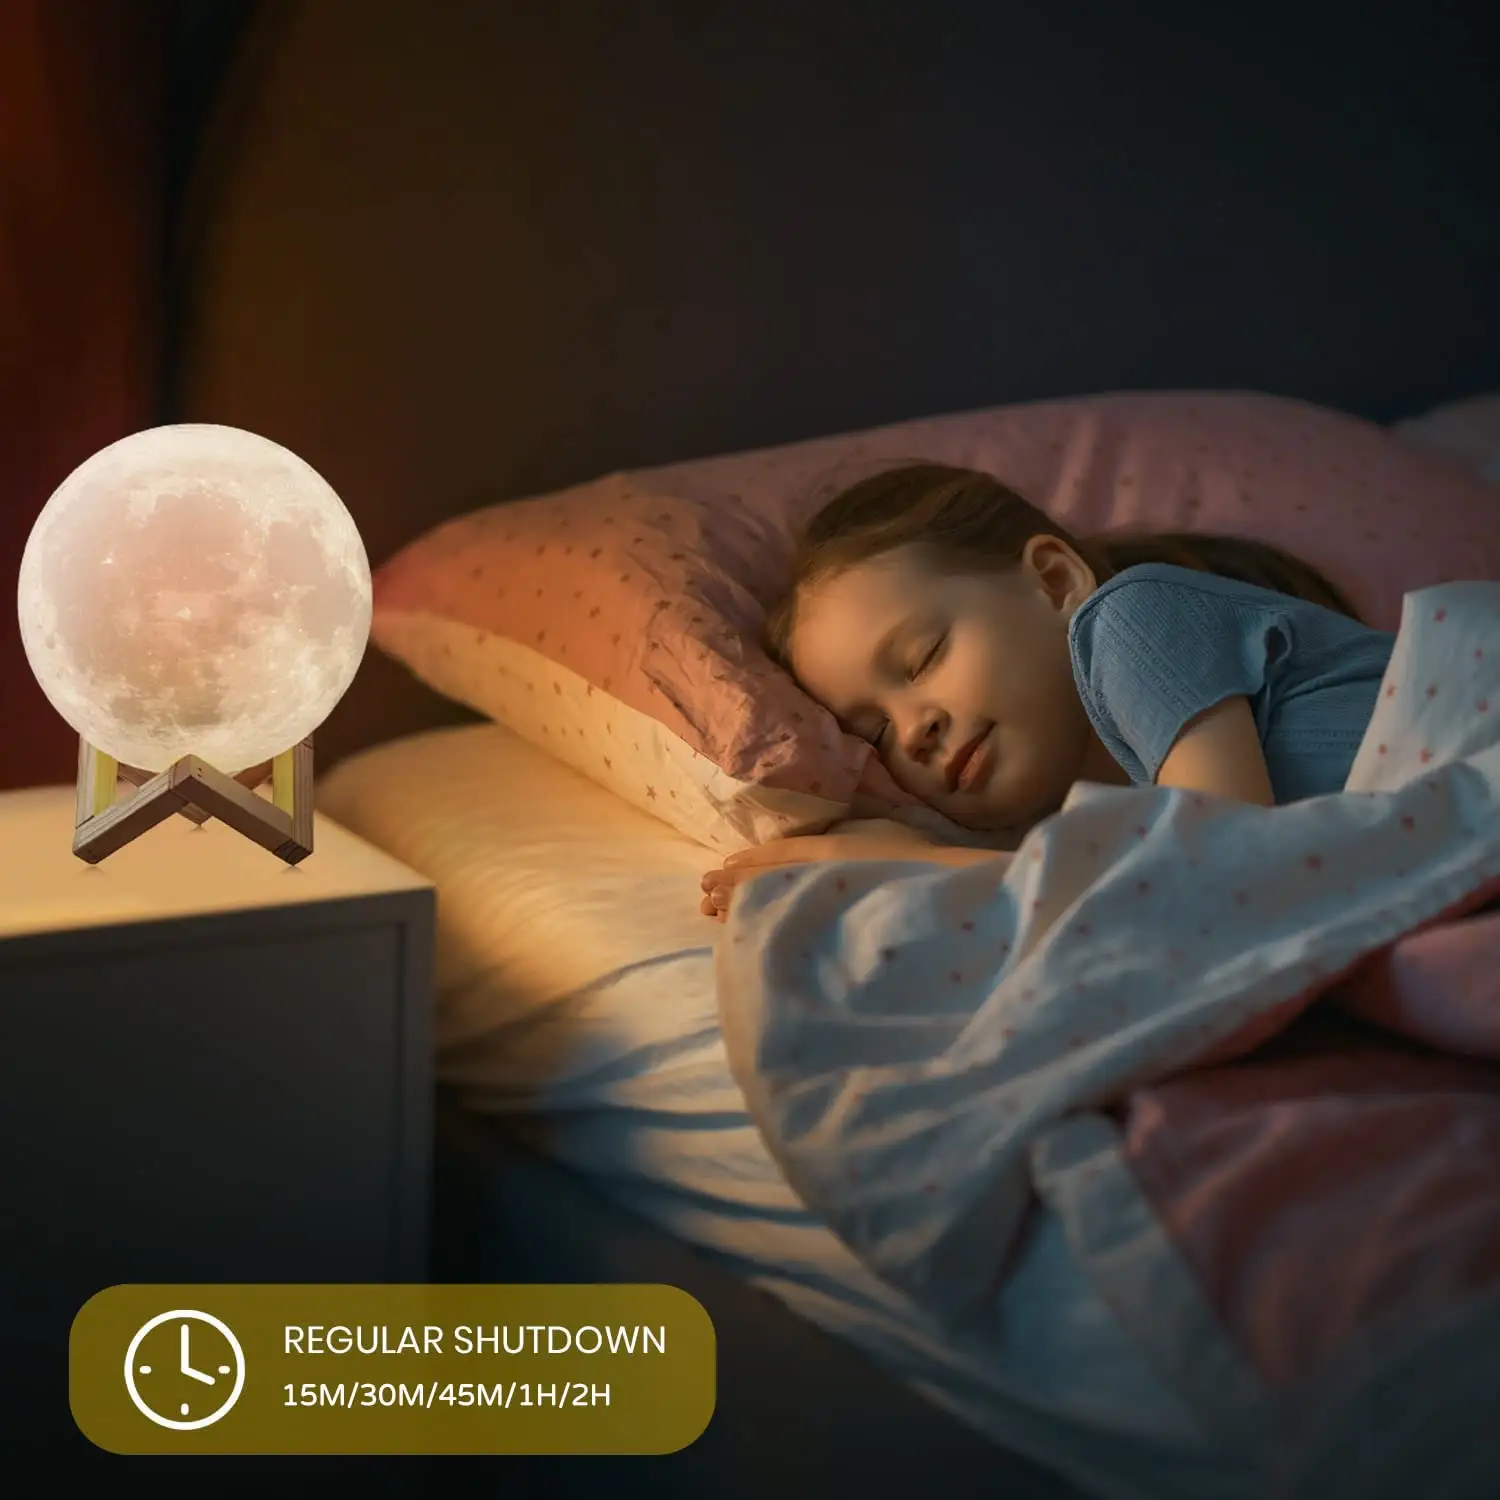 3D Print Girls Boys Women Men Remote Touch Control Moon Lamp Bedroom Decoration Moon Night Fairy Light Moonlight